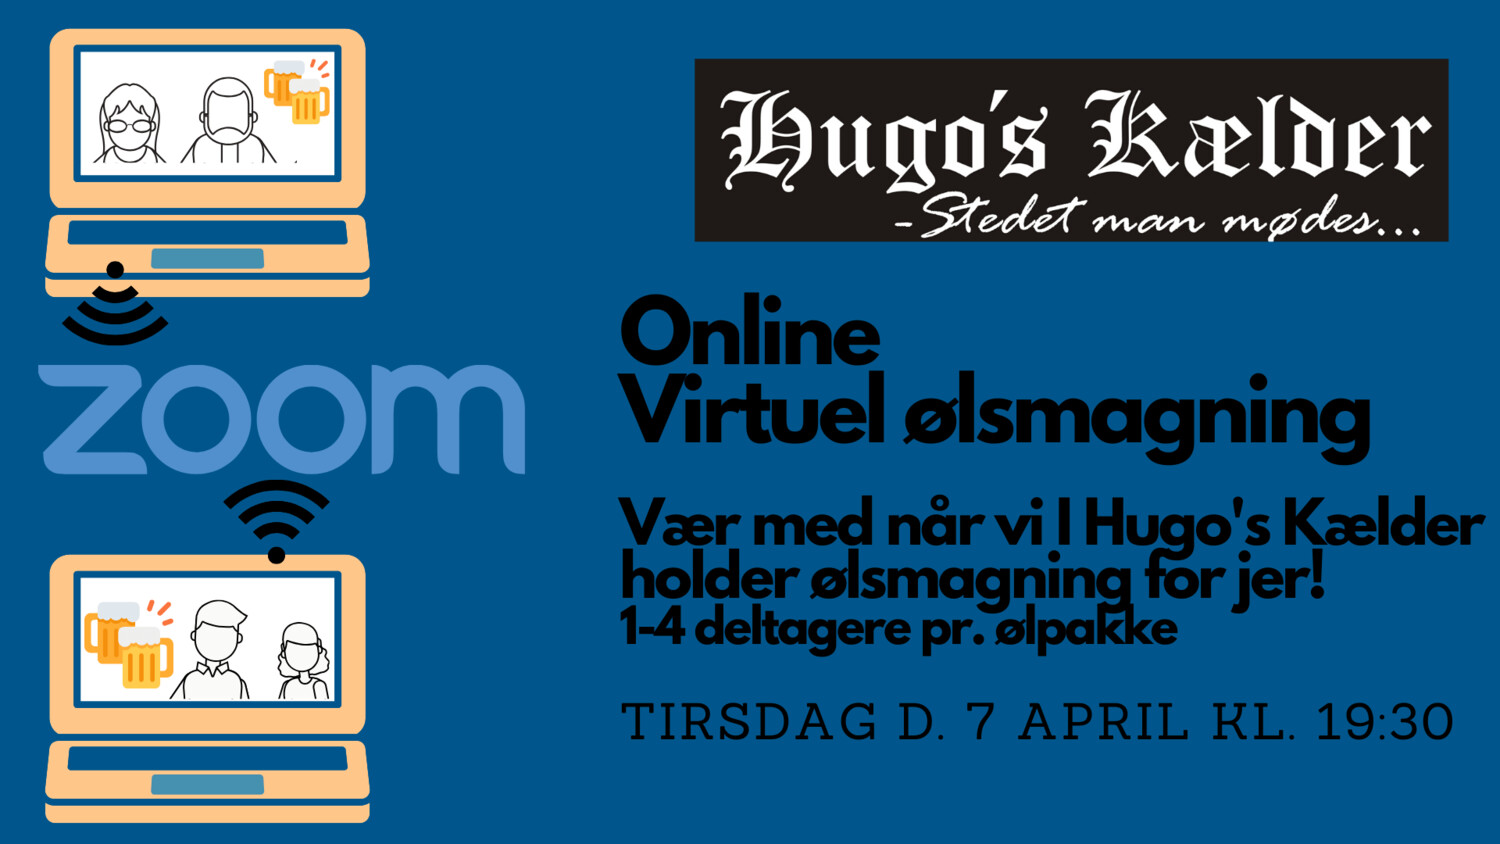 Hugo's Online Virtuel ølsmagning